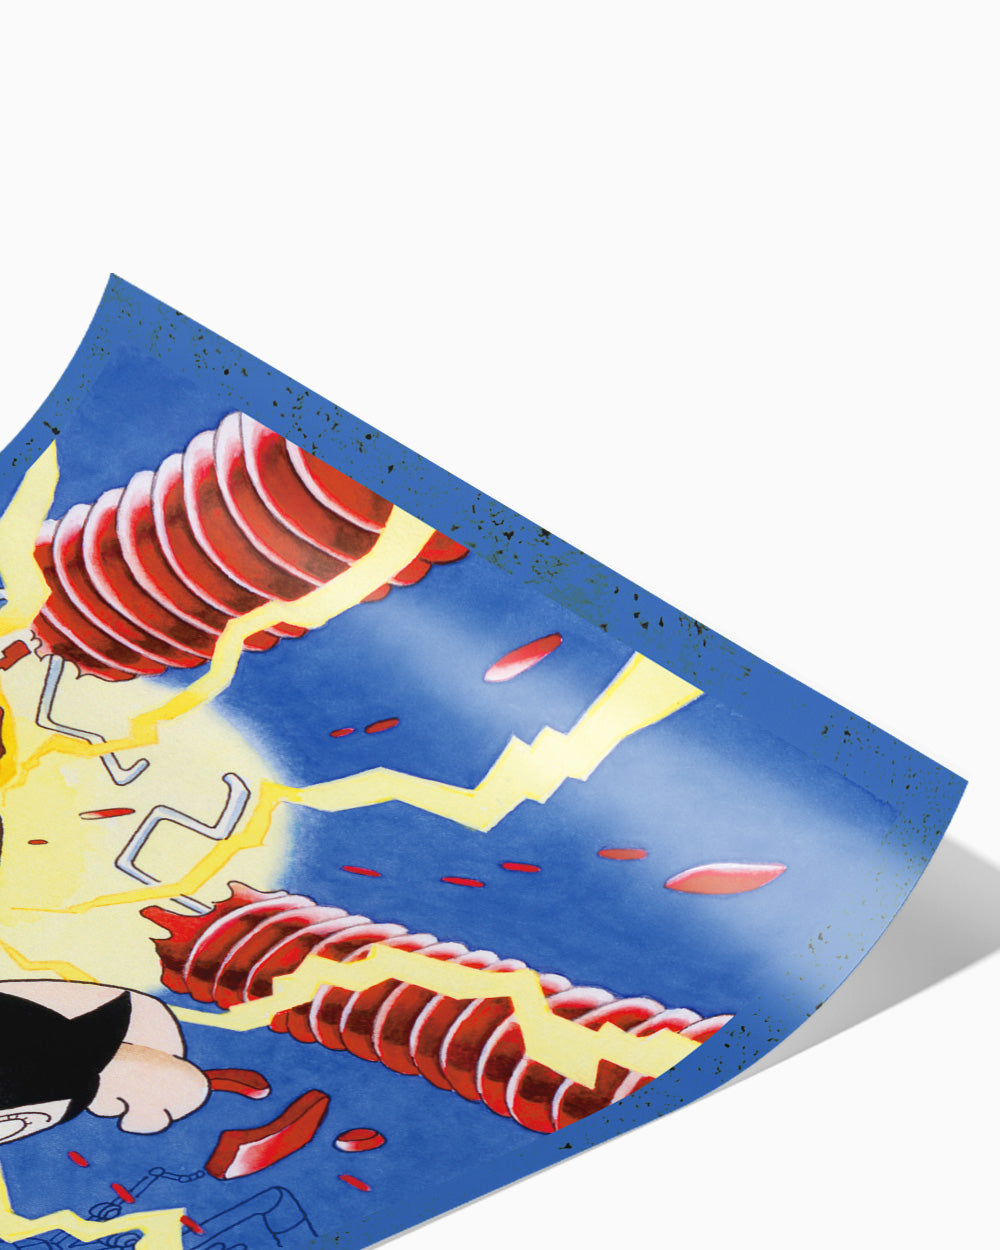 Astro Boy Electro Art Print